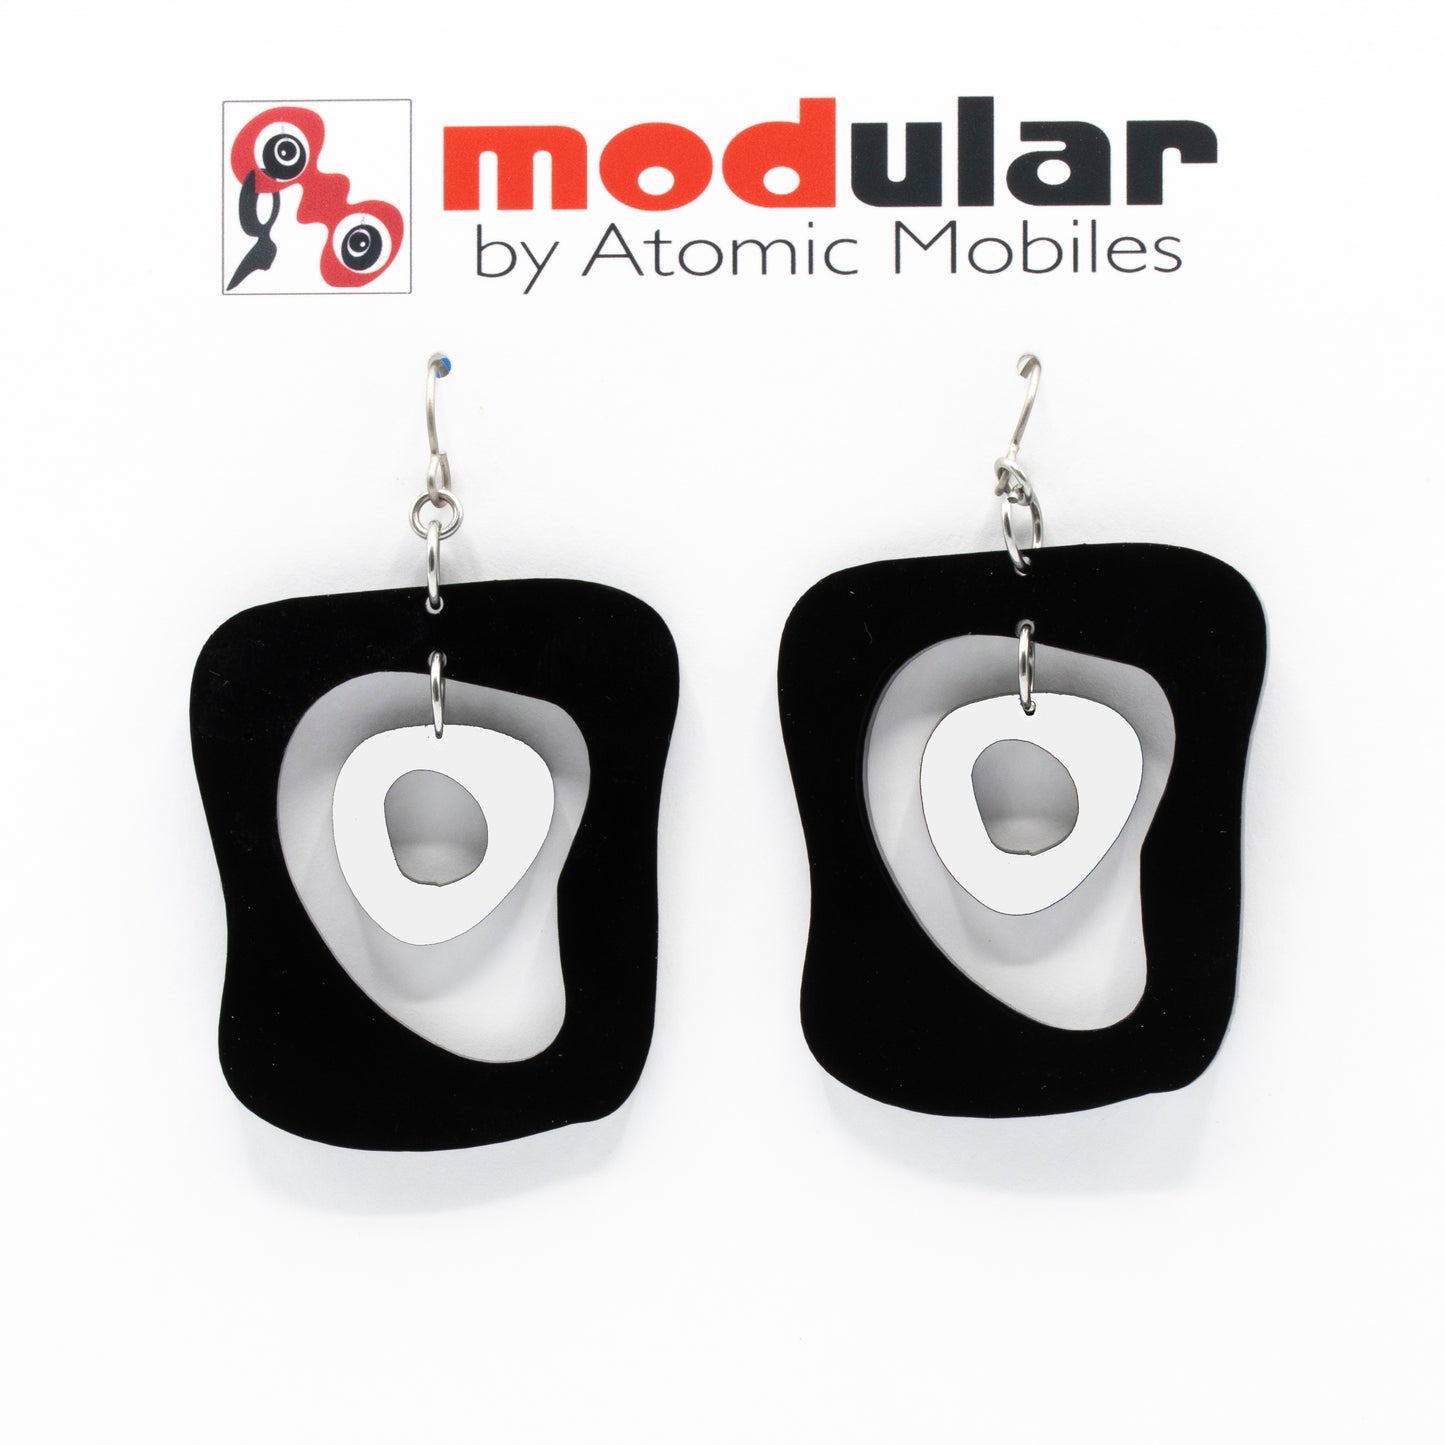 MODular Earrings - Mid Mod Statement Earrings in Black and White by AtomicMobiles.com - mid century inspired modern art dangle earrings